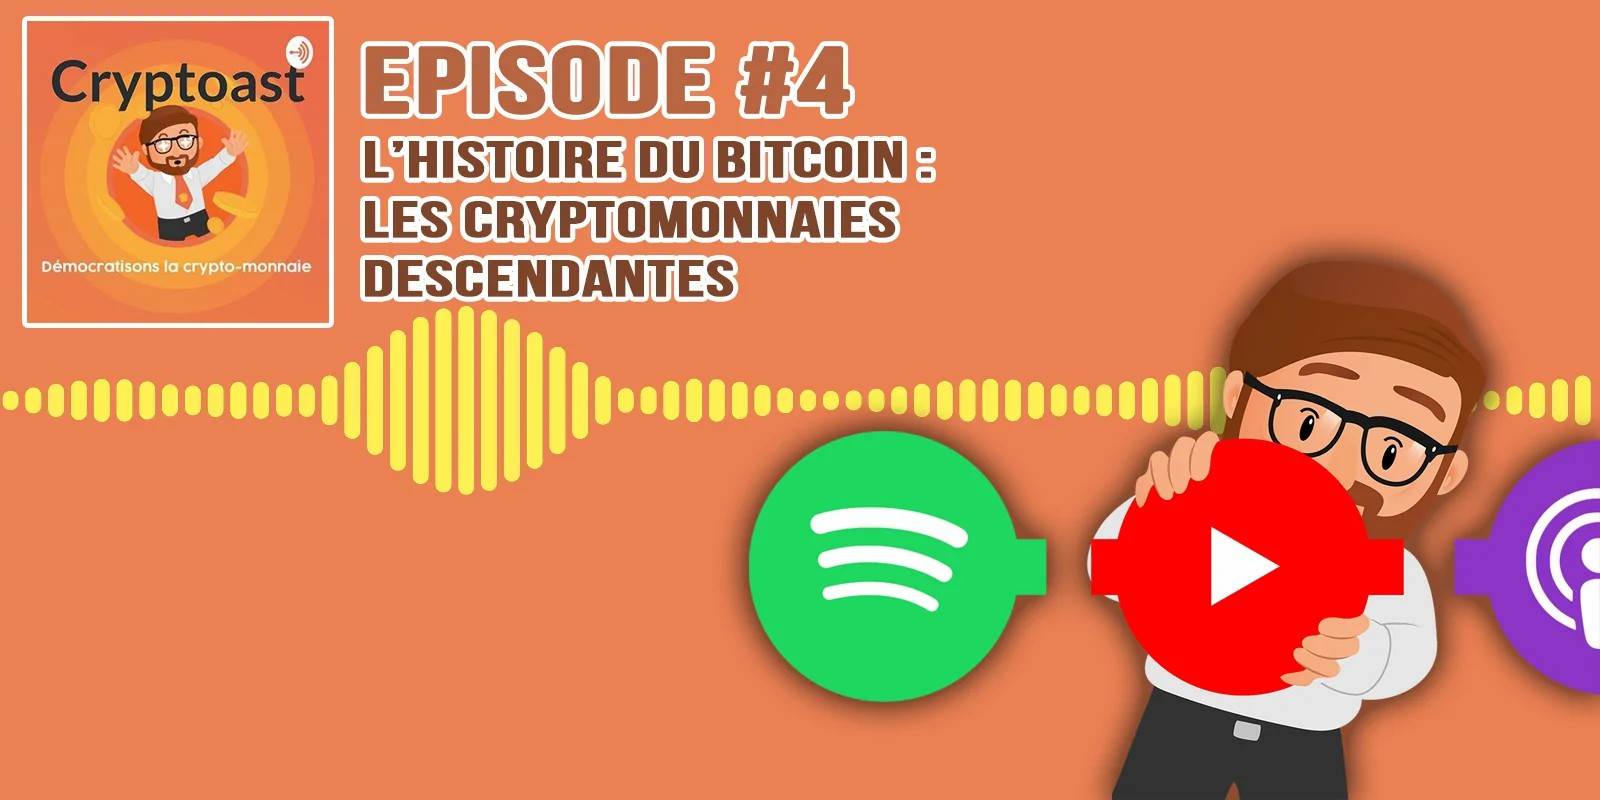 Podcast #4 - Les cryptomonnaies descendantes du Bitcoin